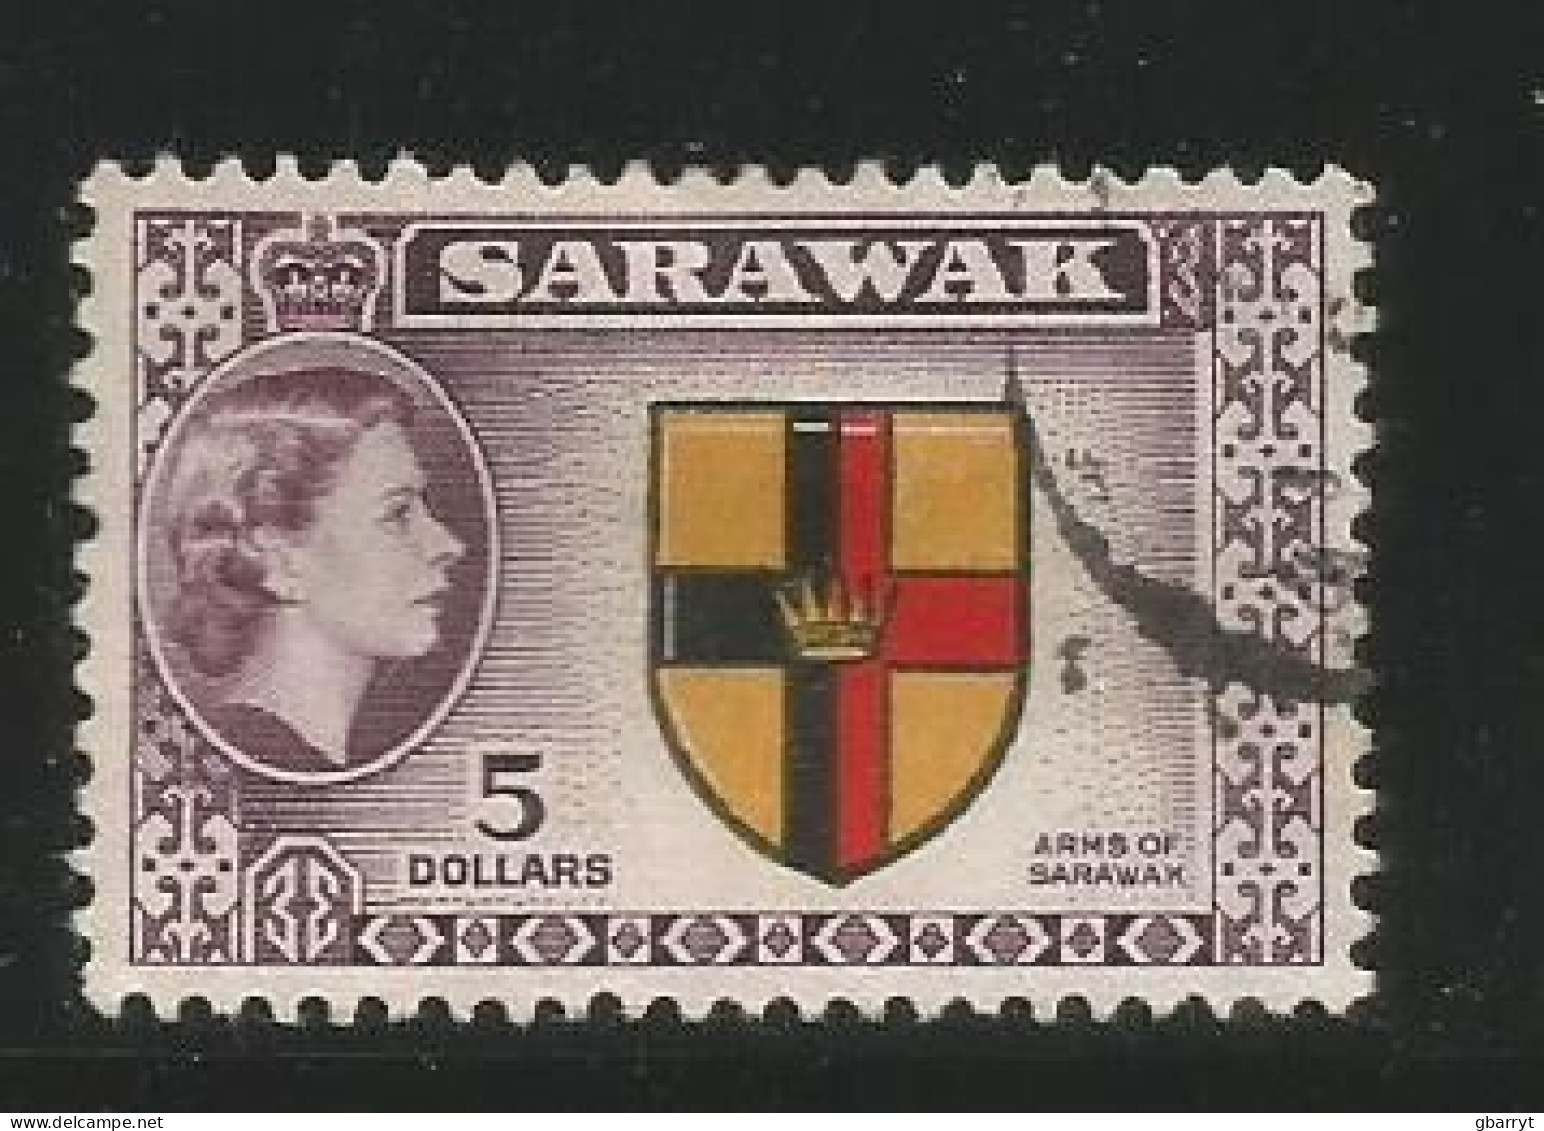 Sarawak Scott 1229 Used VF.smalll Hinge Remnant.....................................s420 - Sarawak (...-1963)